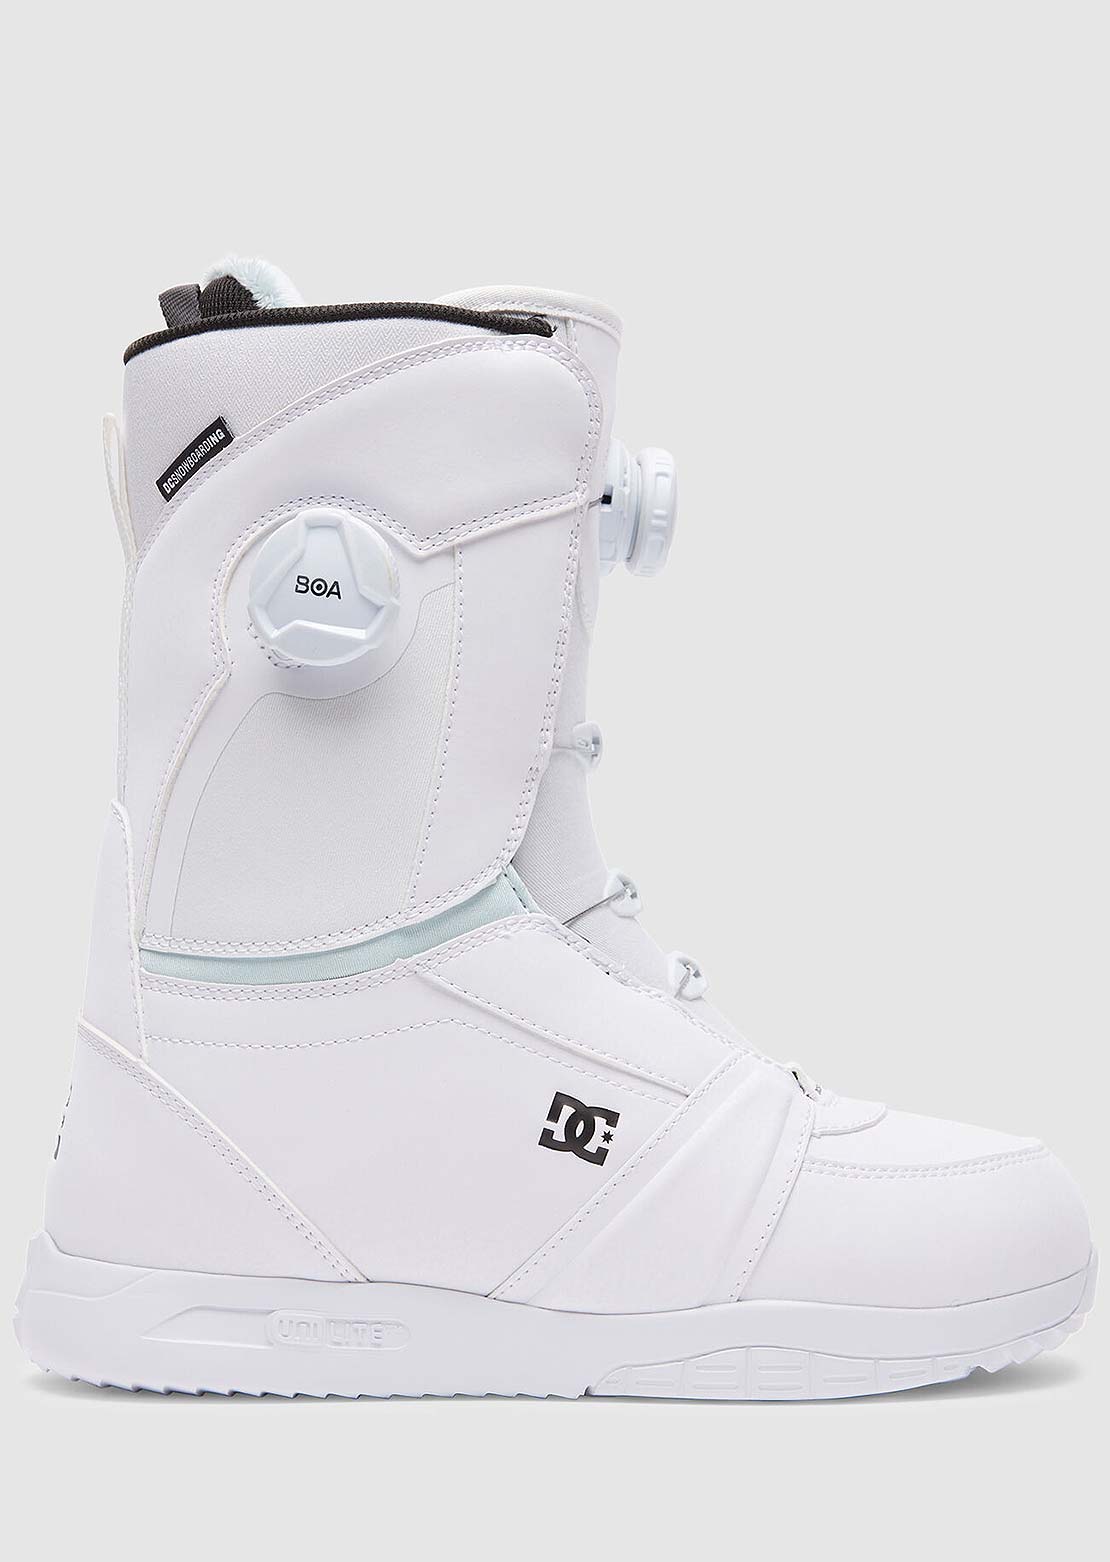 DC Women&#39;s Lotus Snowboard Boots White/White/Black